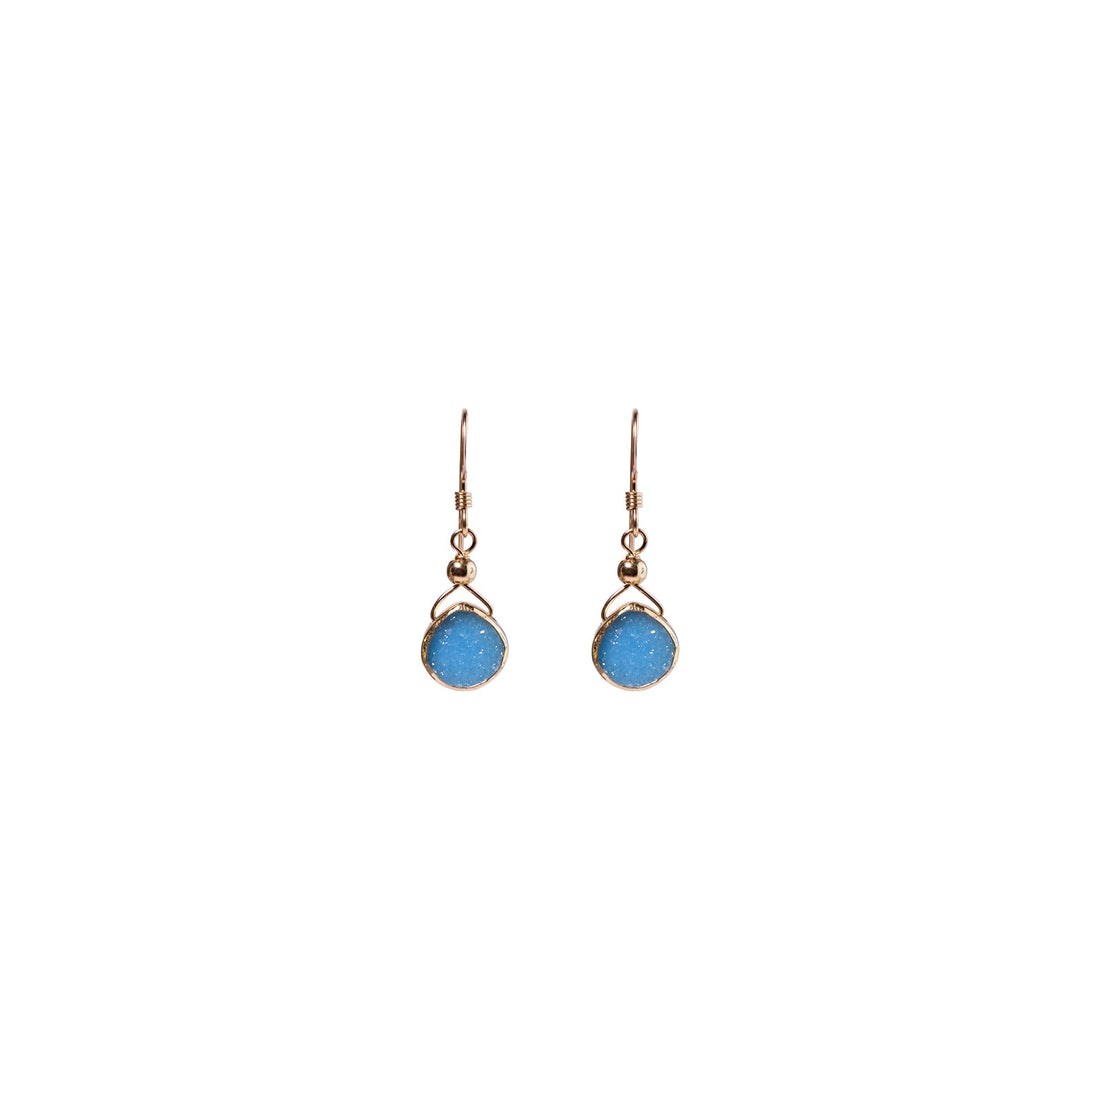 Julianna Earrings, Blue Druzy Pear contoured with Gold Earrings Sayulita Sol 